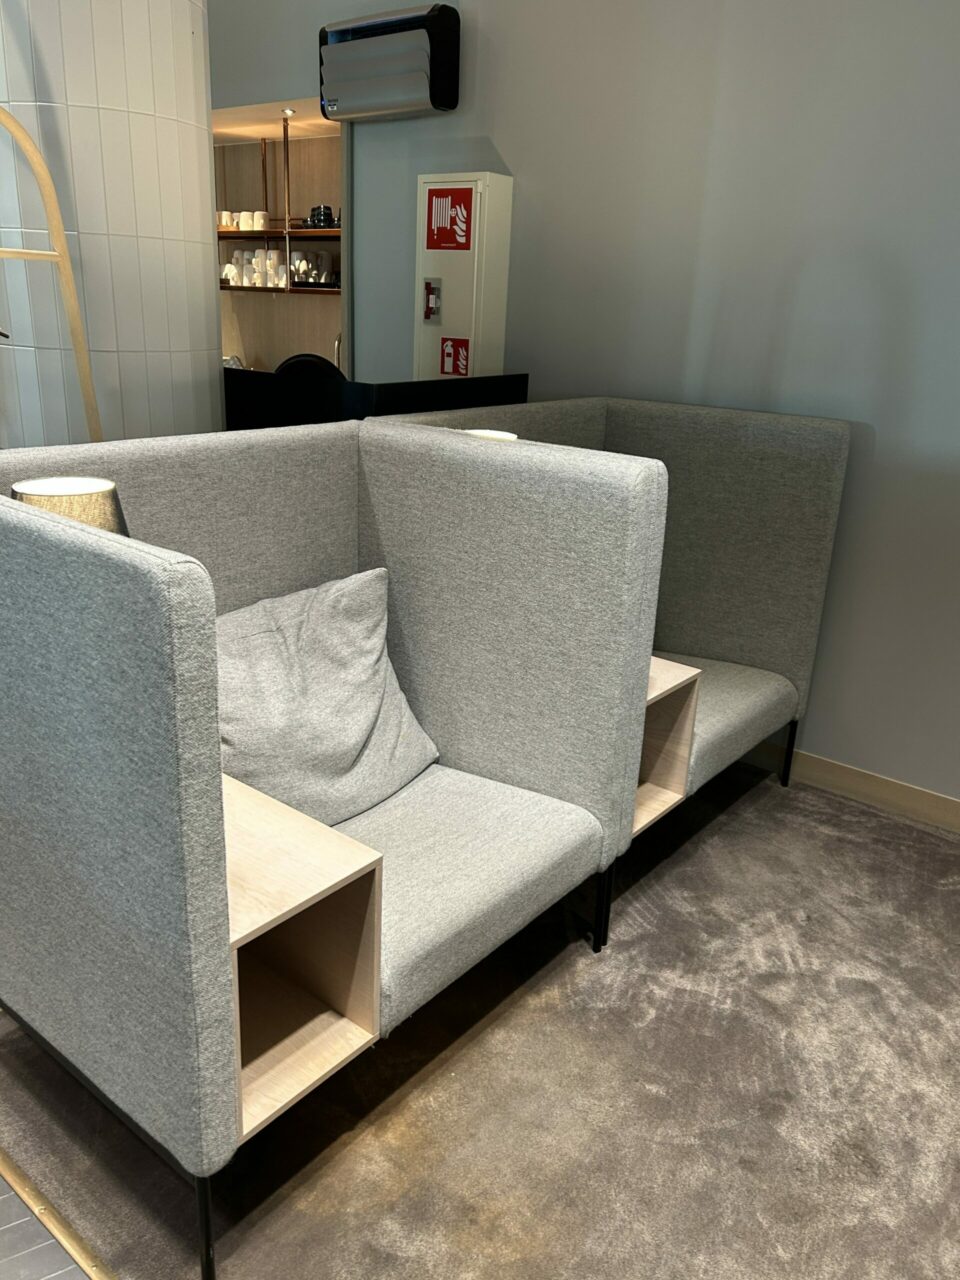 Finnair's new Platinum and business class lounges